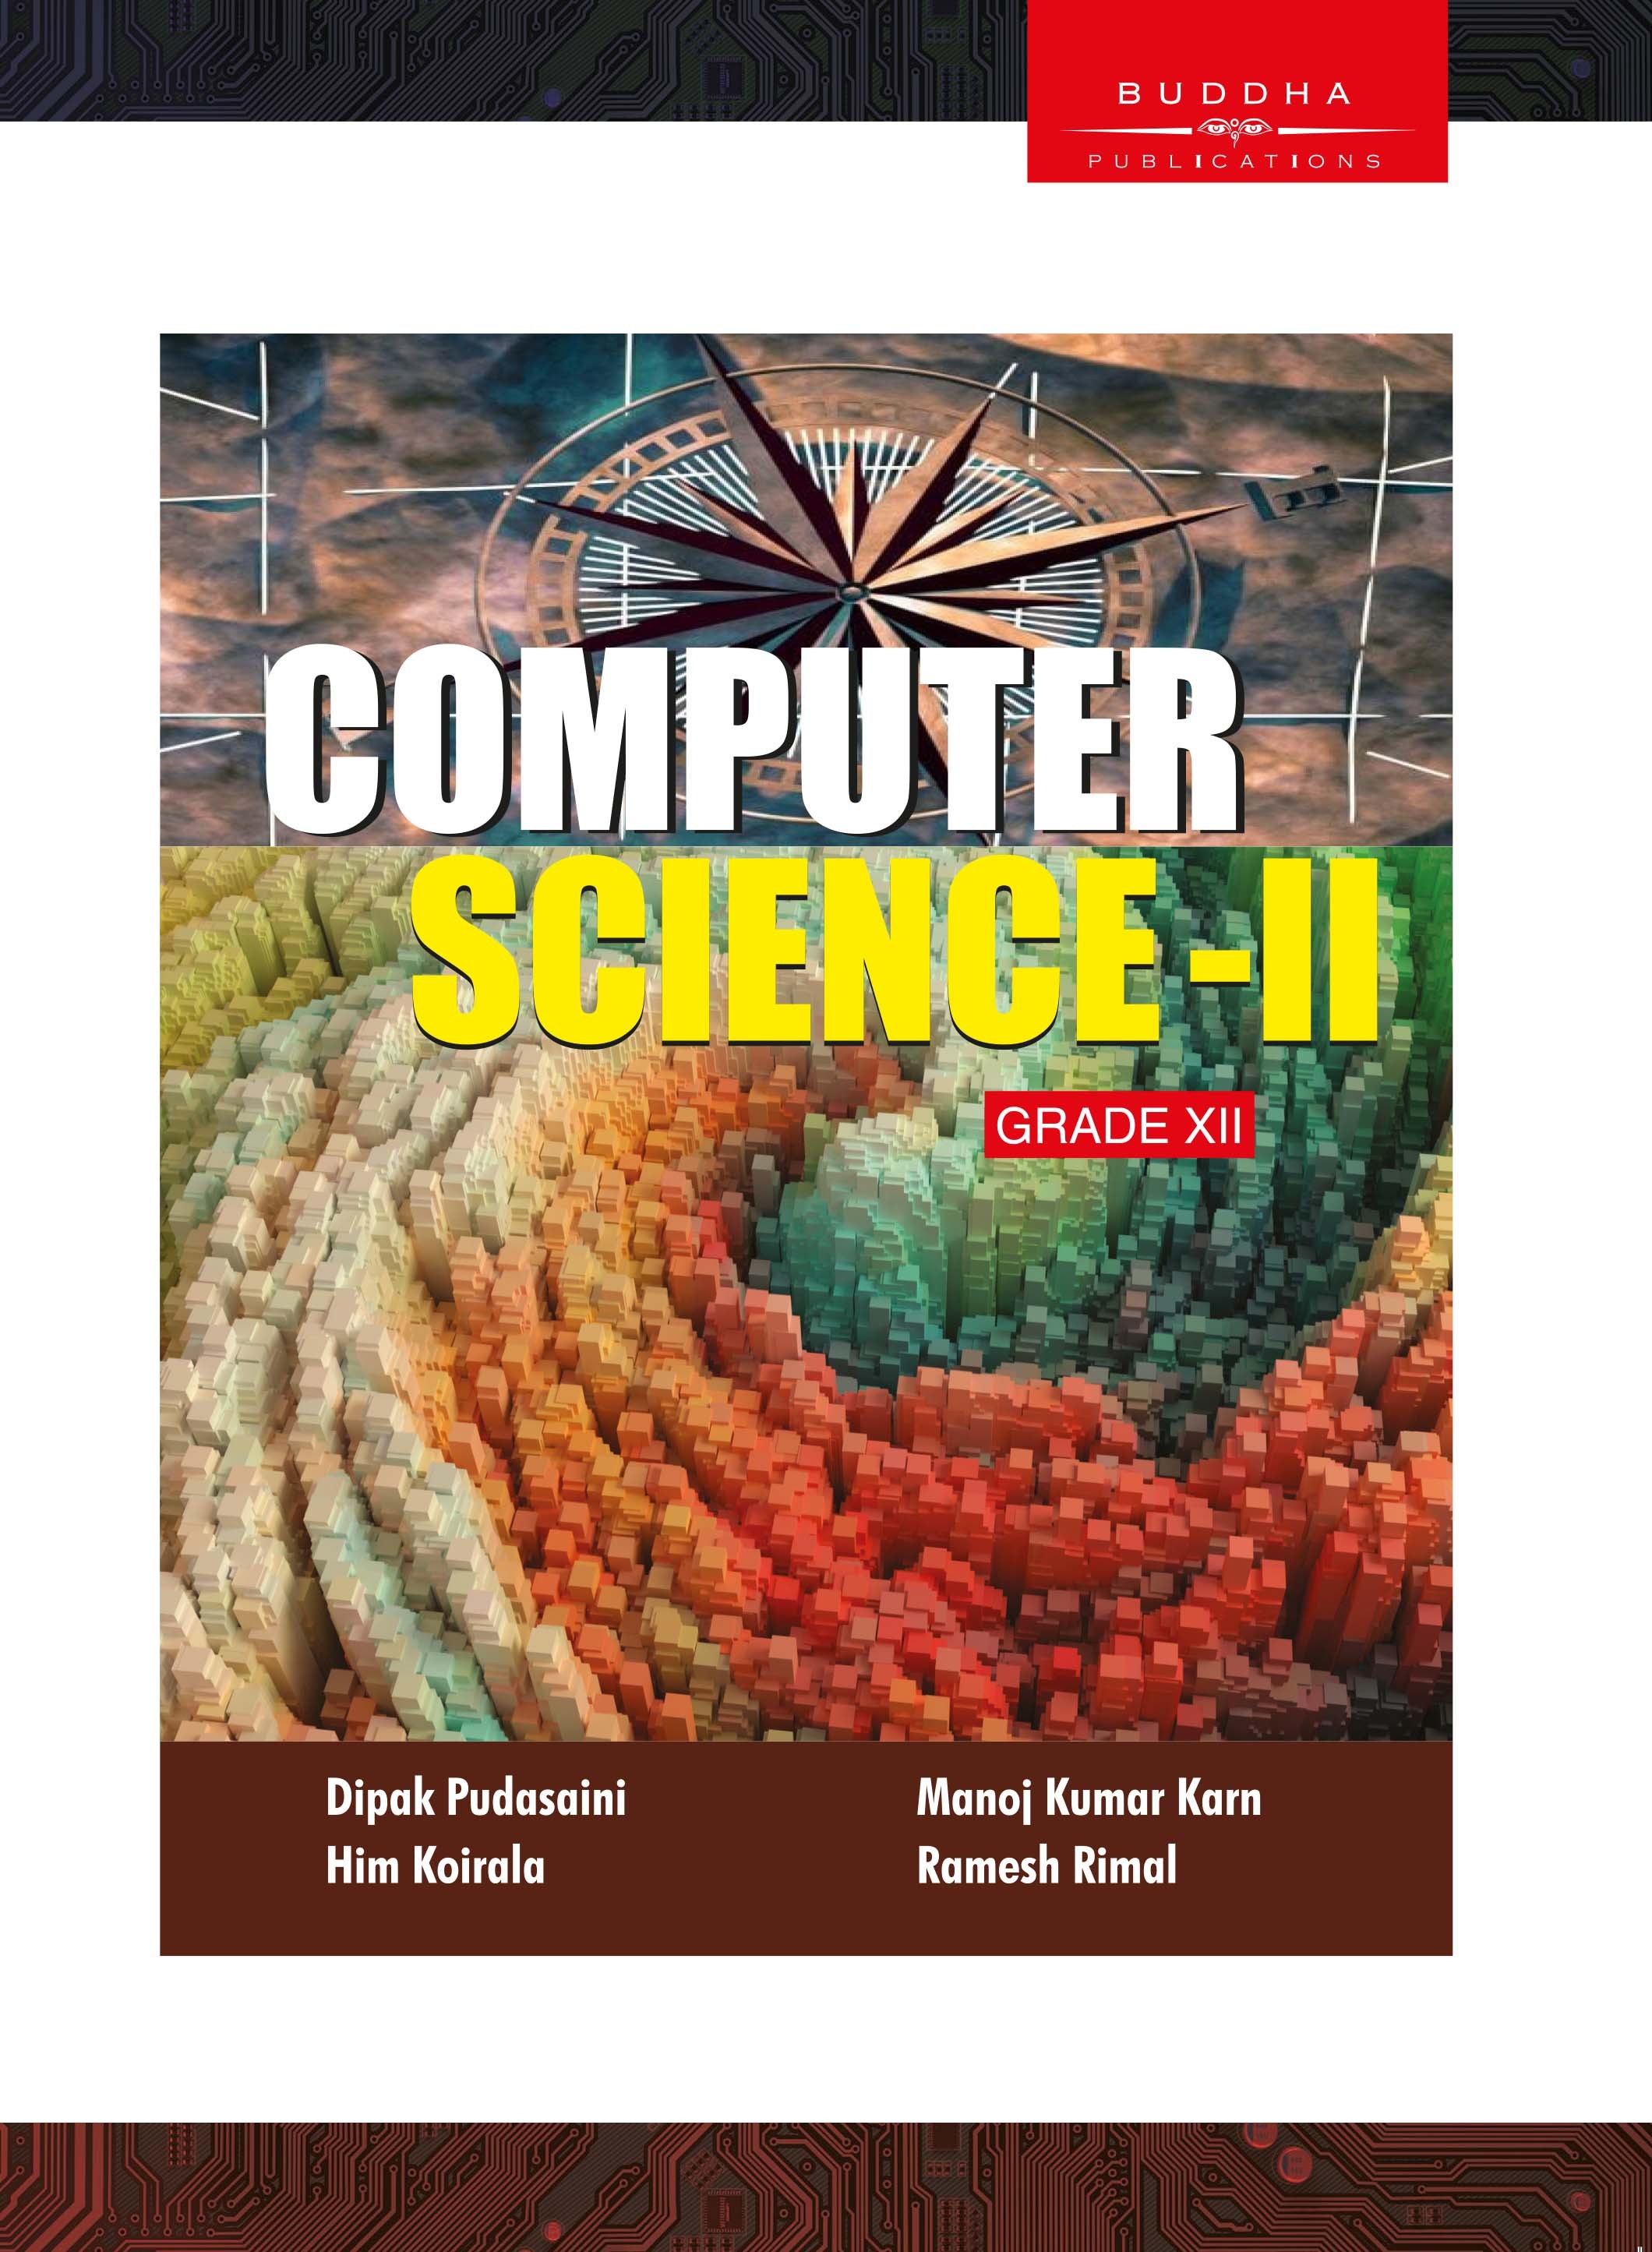 Computer Science - Grade XII